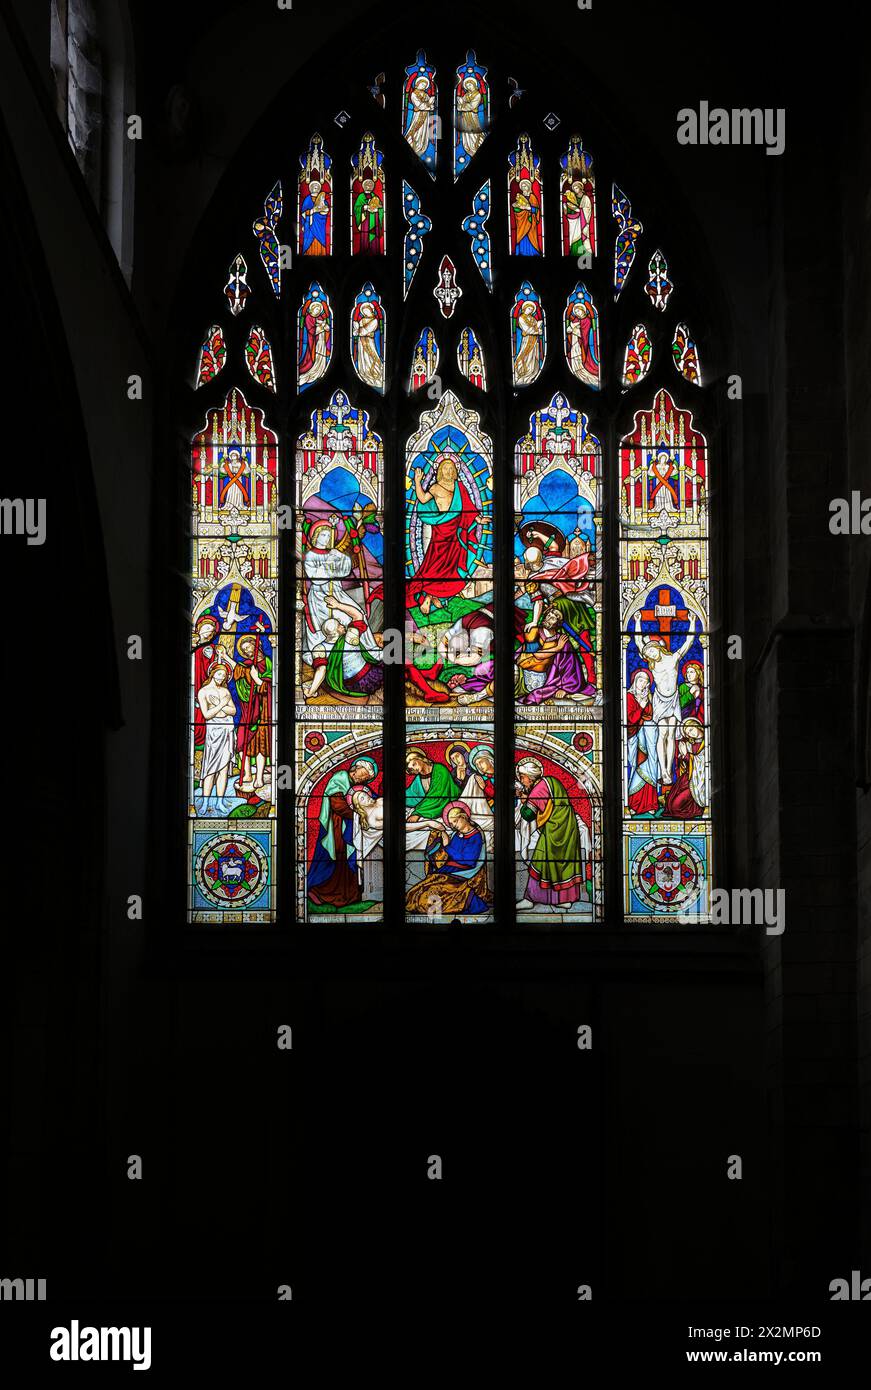 Buntglasfenster, Ereignisse im Leben Jesu Christi, in der St. John the Baptist Church, Stamford, England. Stockfoto